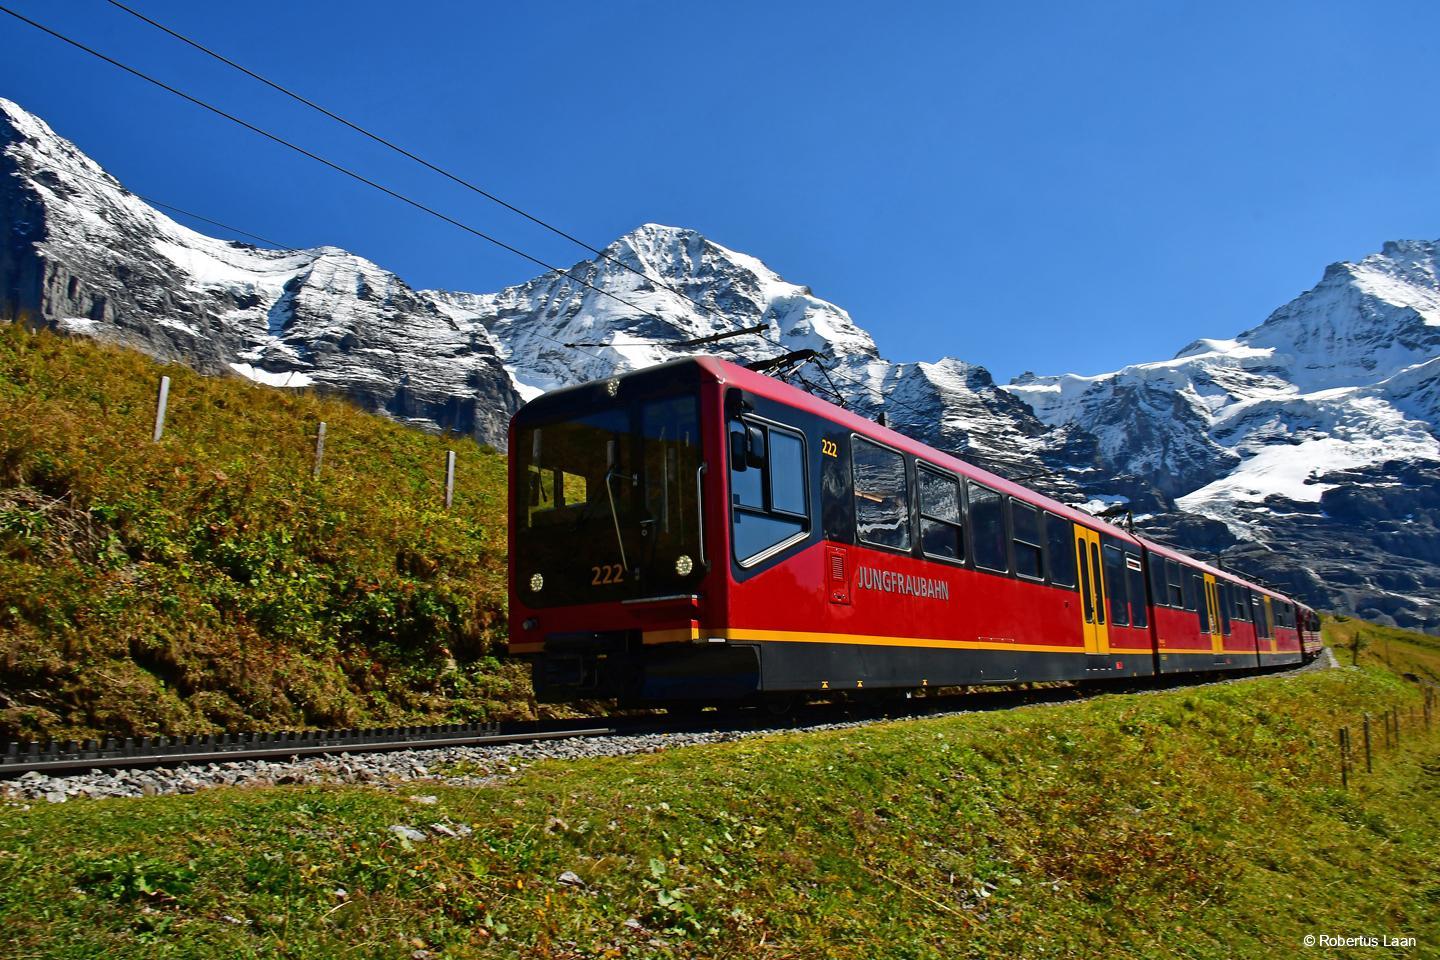 Jungfrau railway on its way up